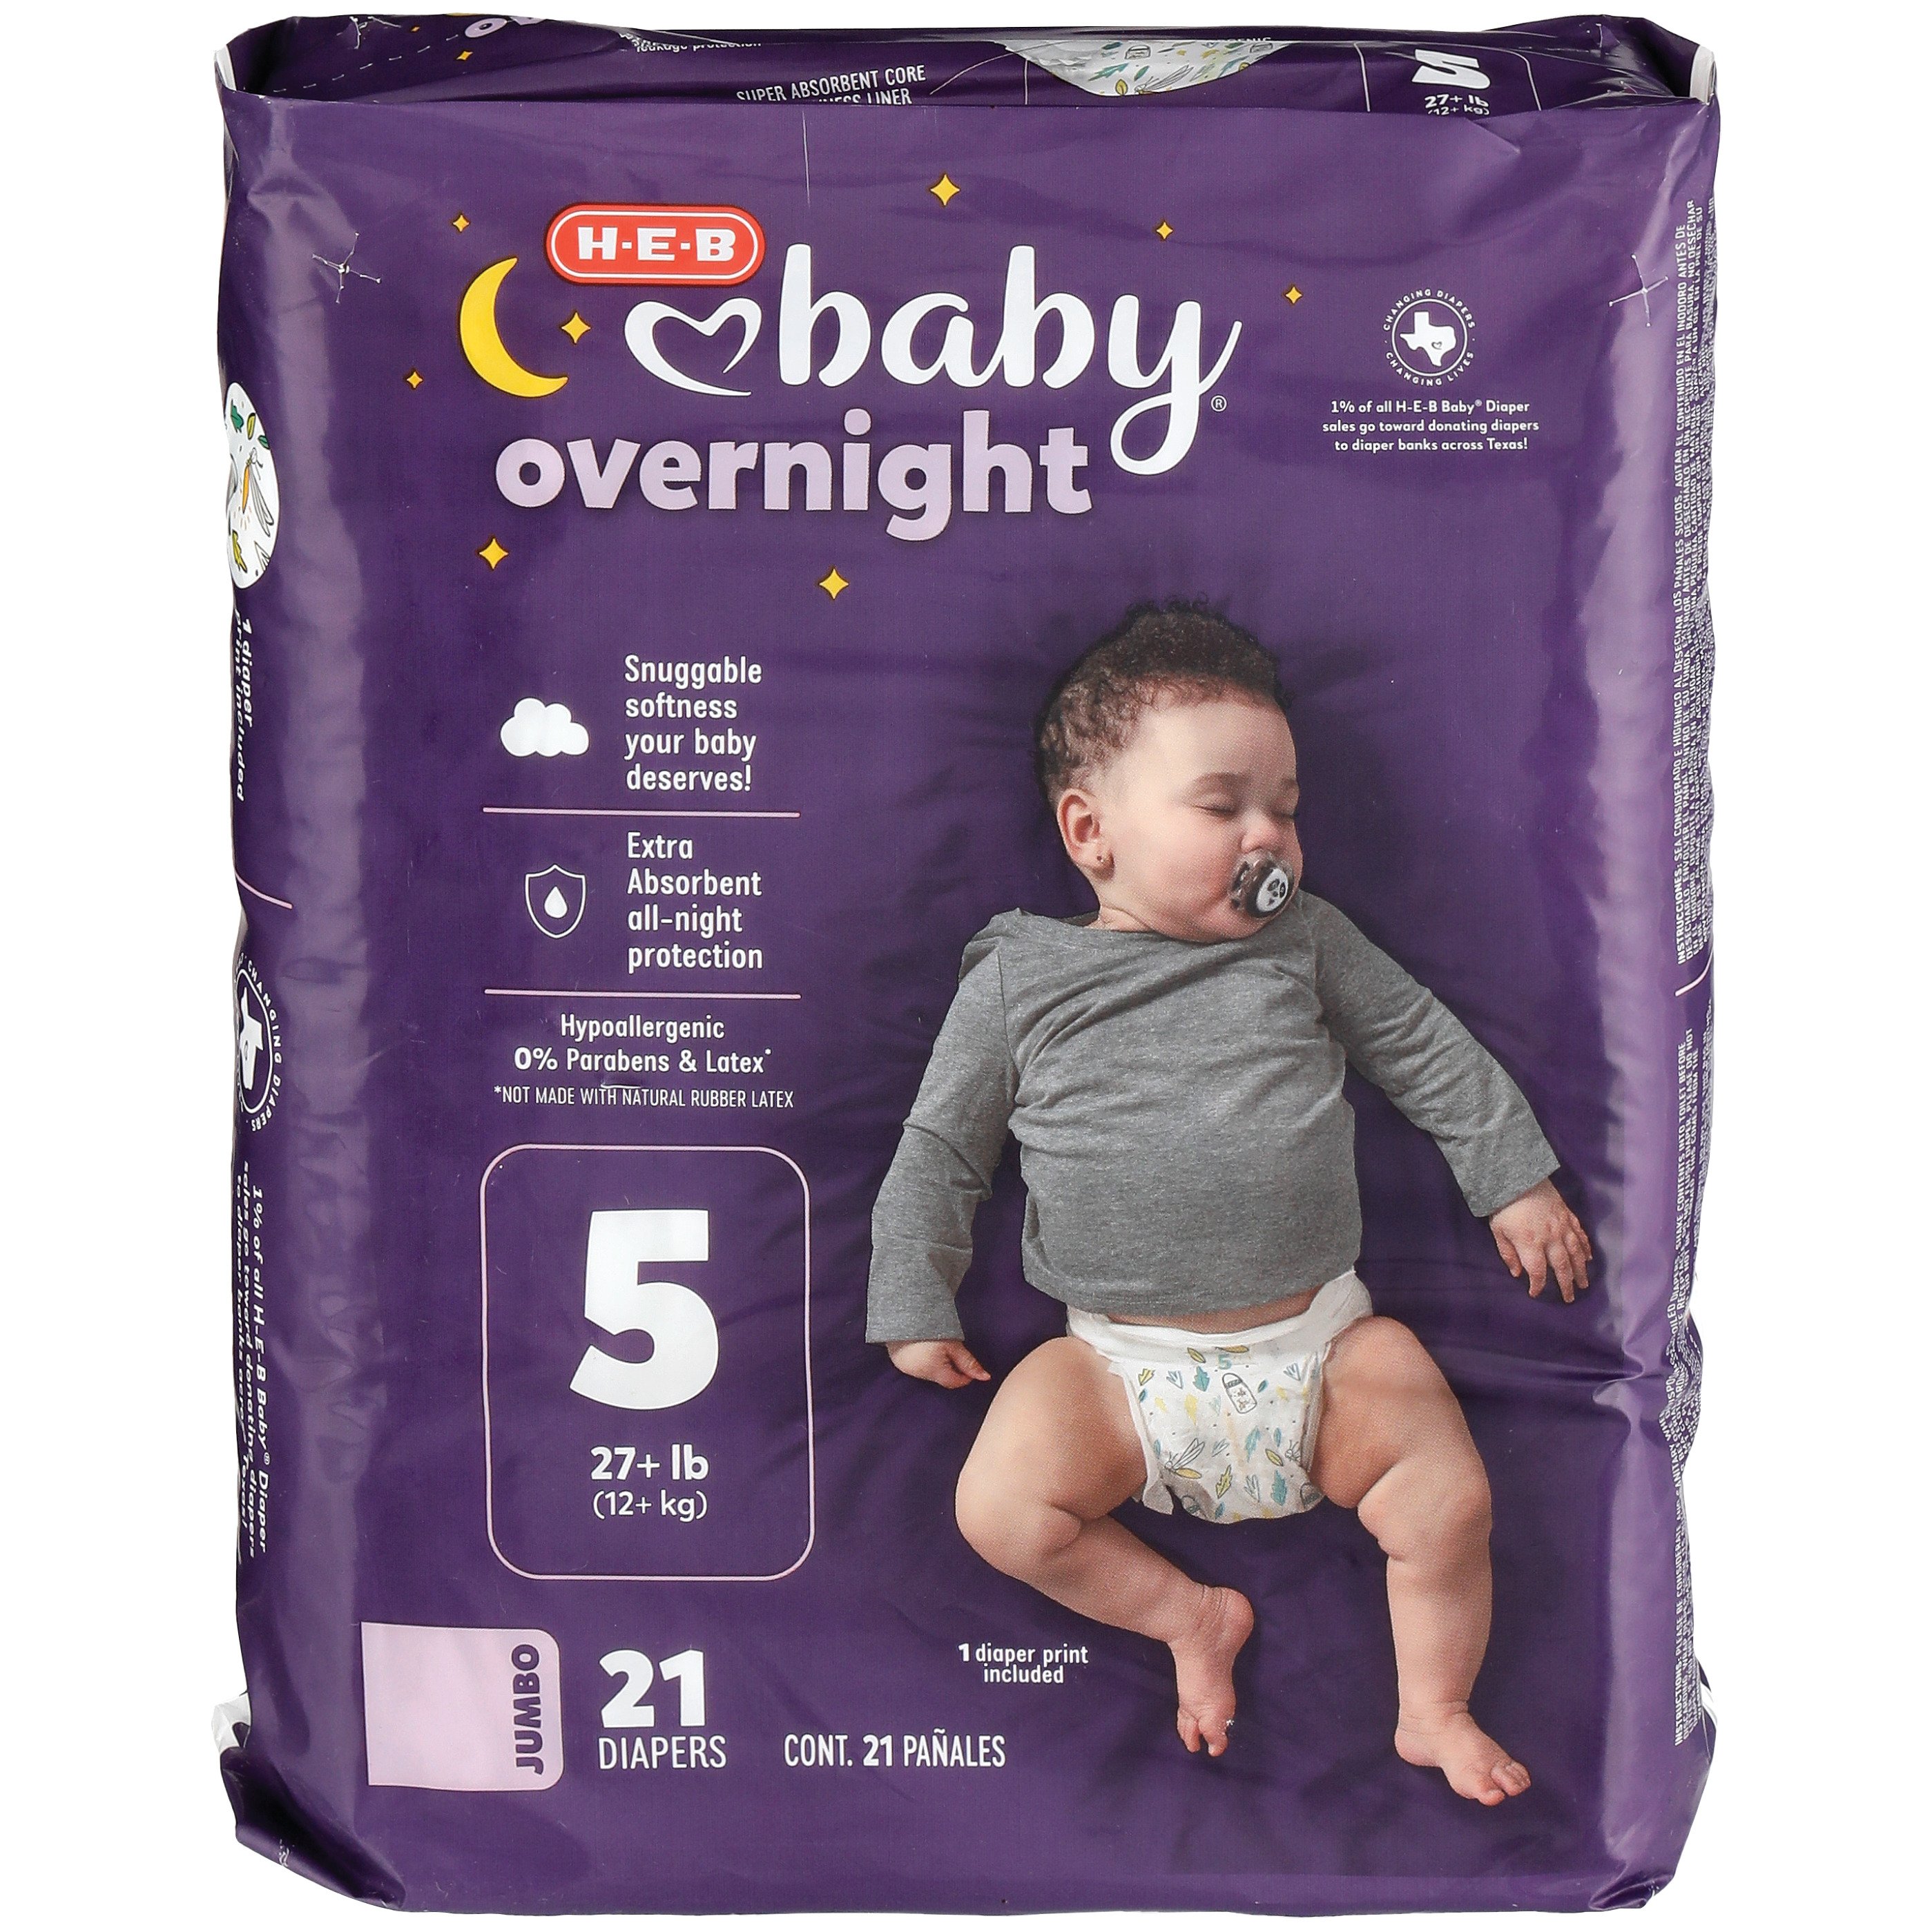 H-E-B Baby Jumbo Pack Diapers - Newborn - Shop Diapers at H-E-B